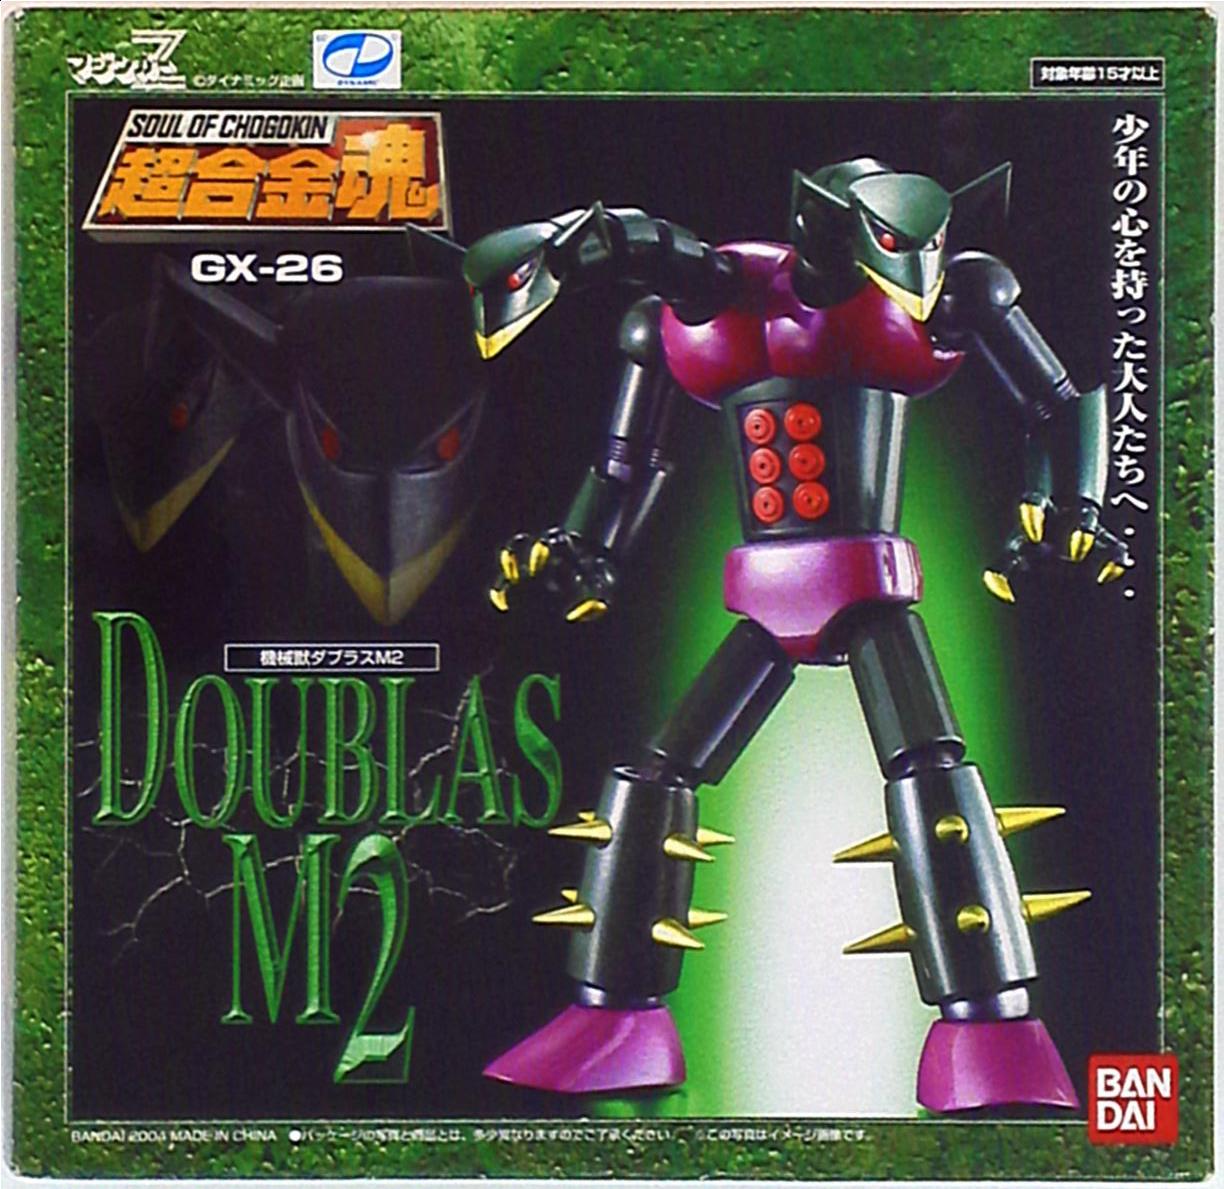 Bandai Soul of Chogokin GX26 Mechanical Beast Doublas M2 GX26